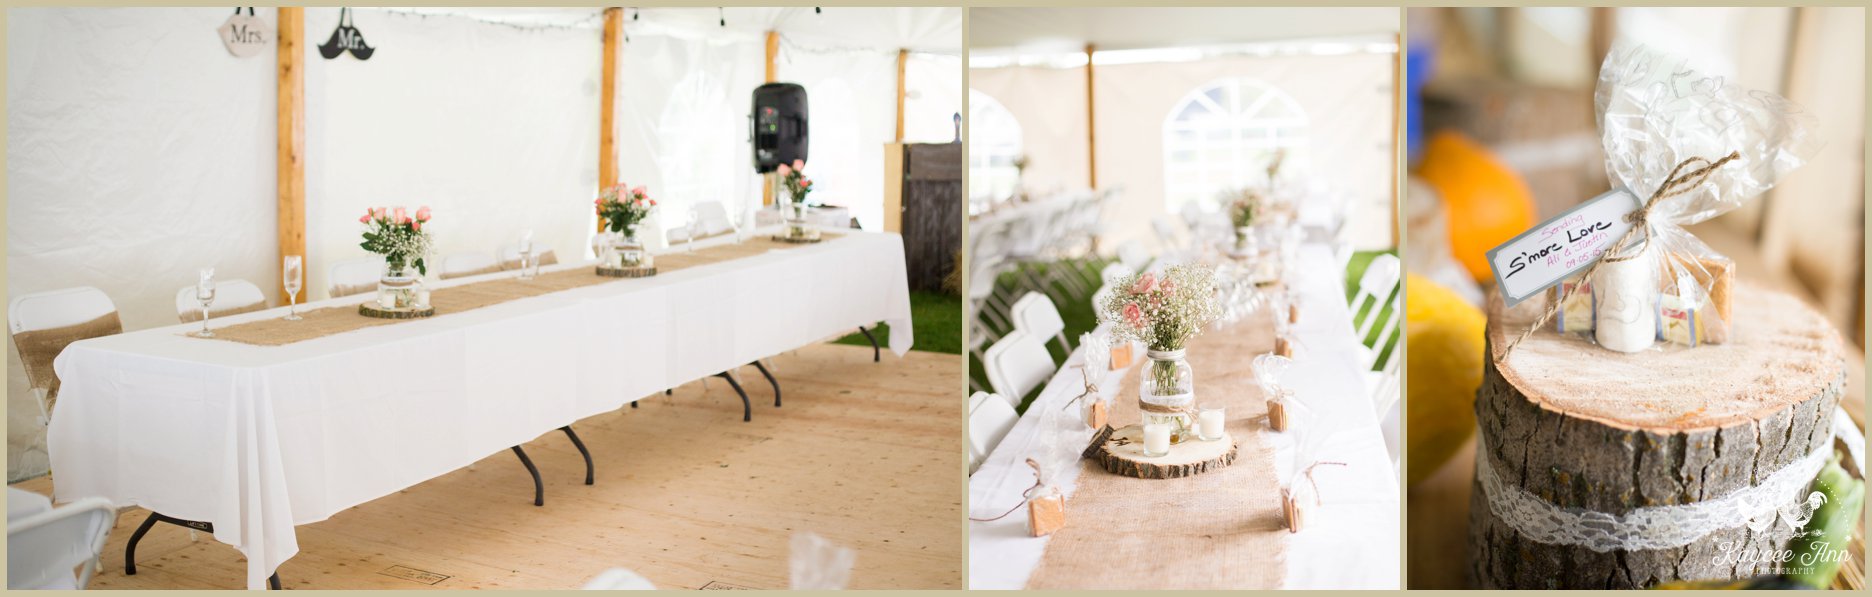 burlap table runners, tree cookie, mason jar vase, outdoor innisfail wedding